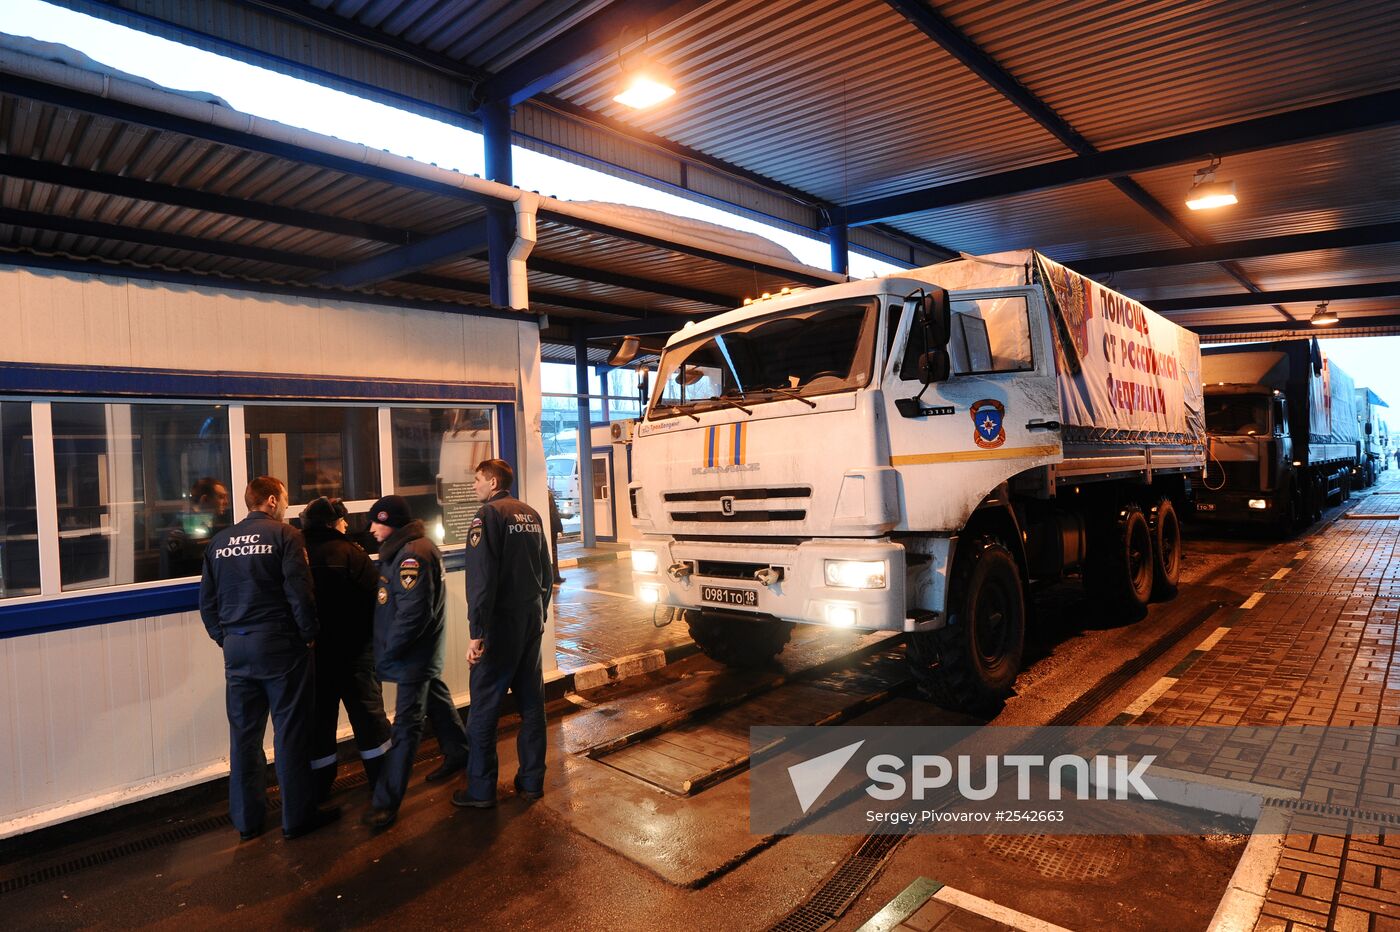 Ninth Russian humanitarian aid convoy arrives at Donetsk checkpoint